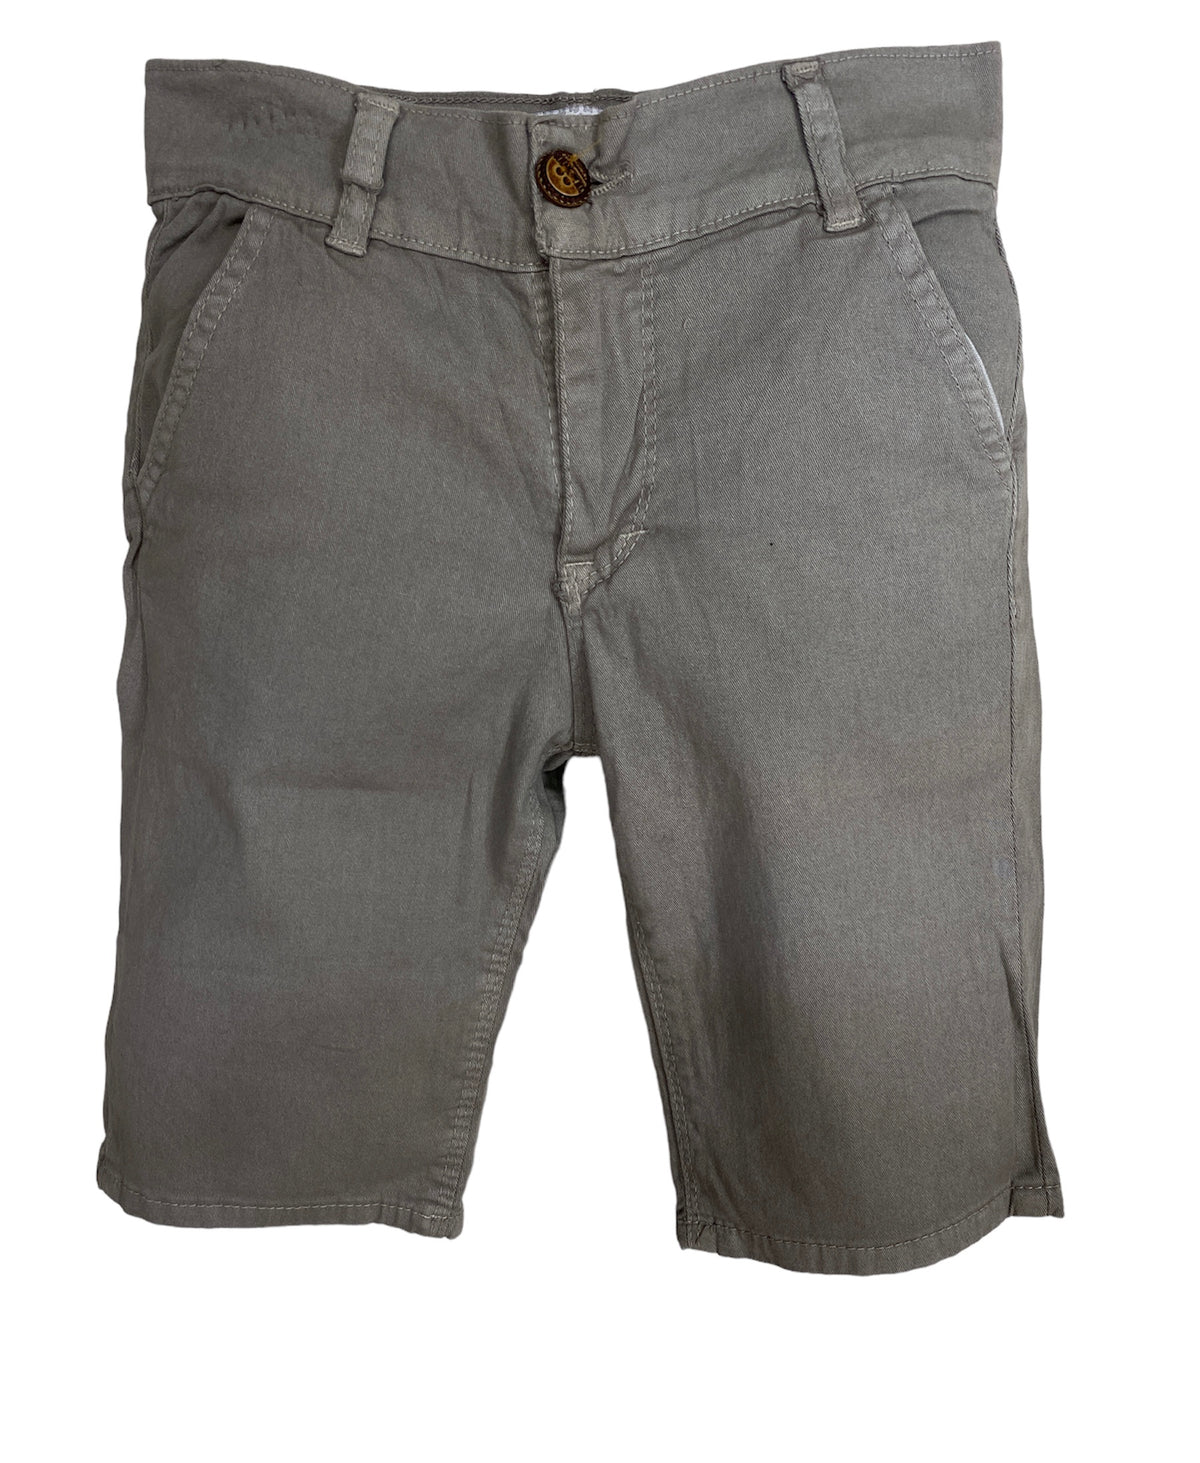 Cotton Shorts - Adjustable Lastic